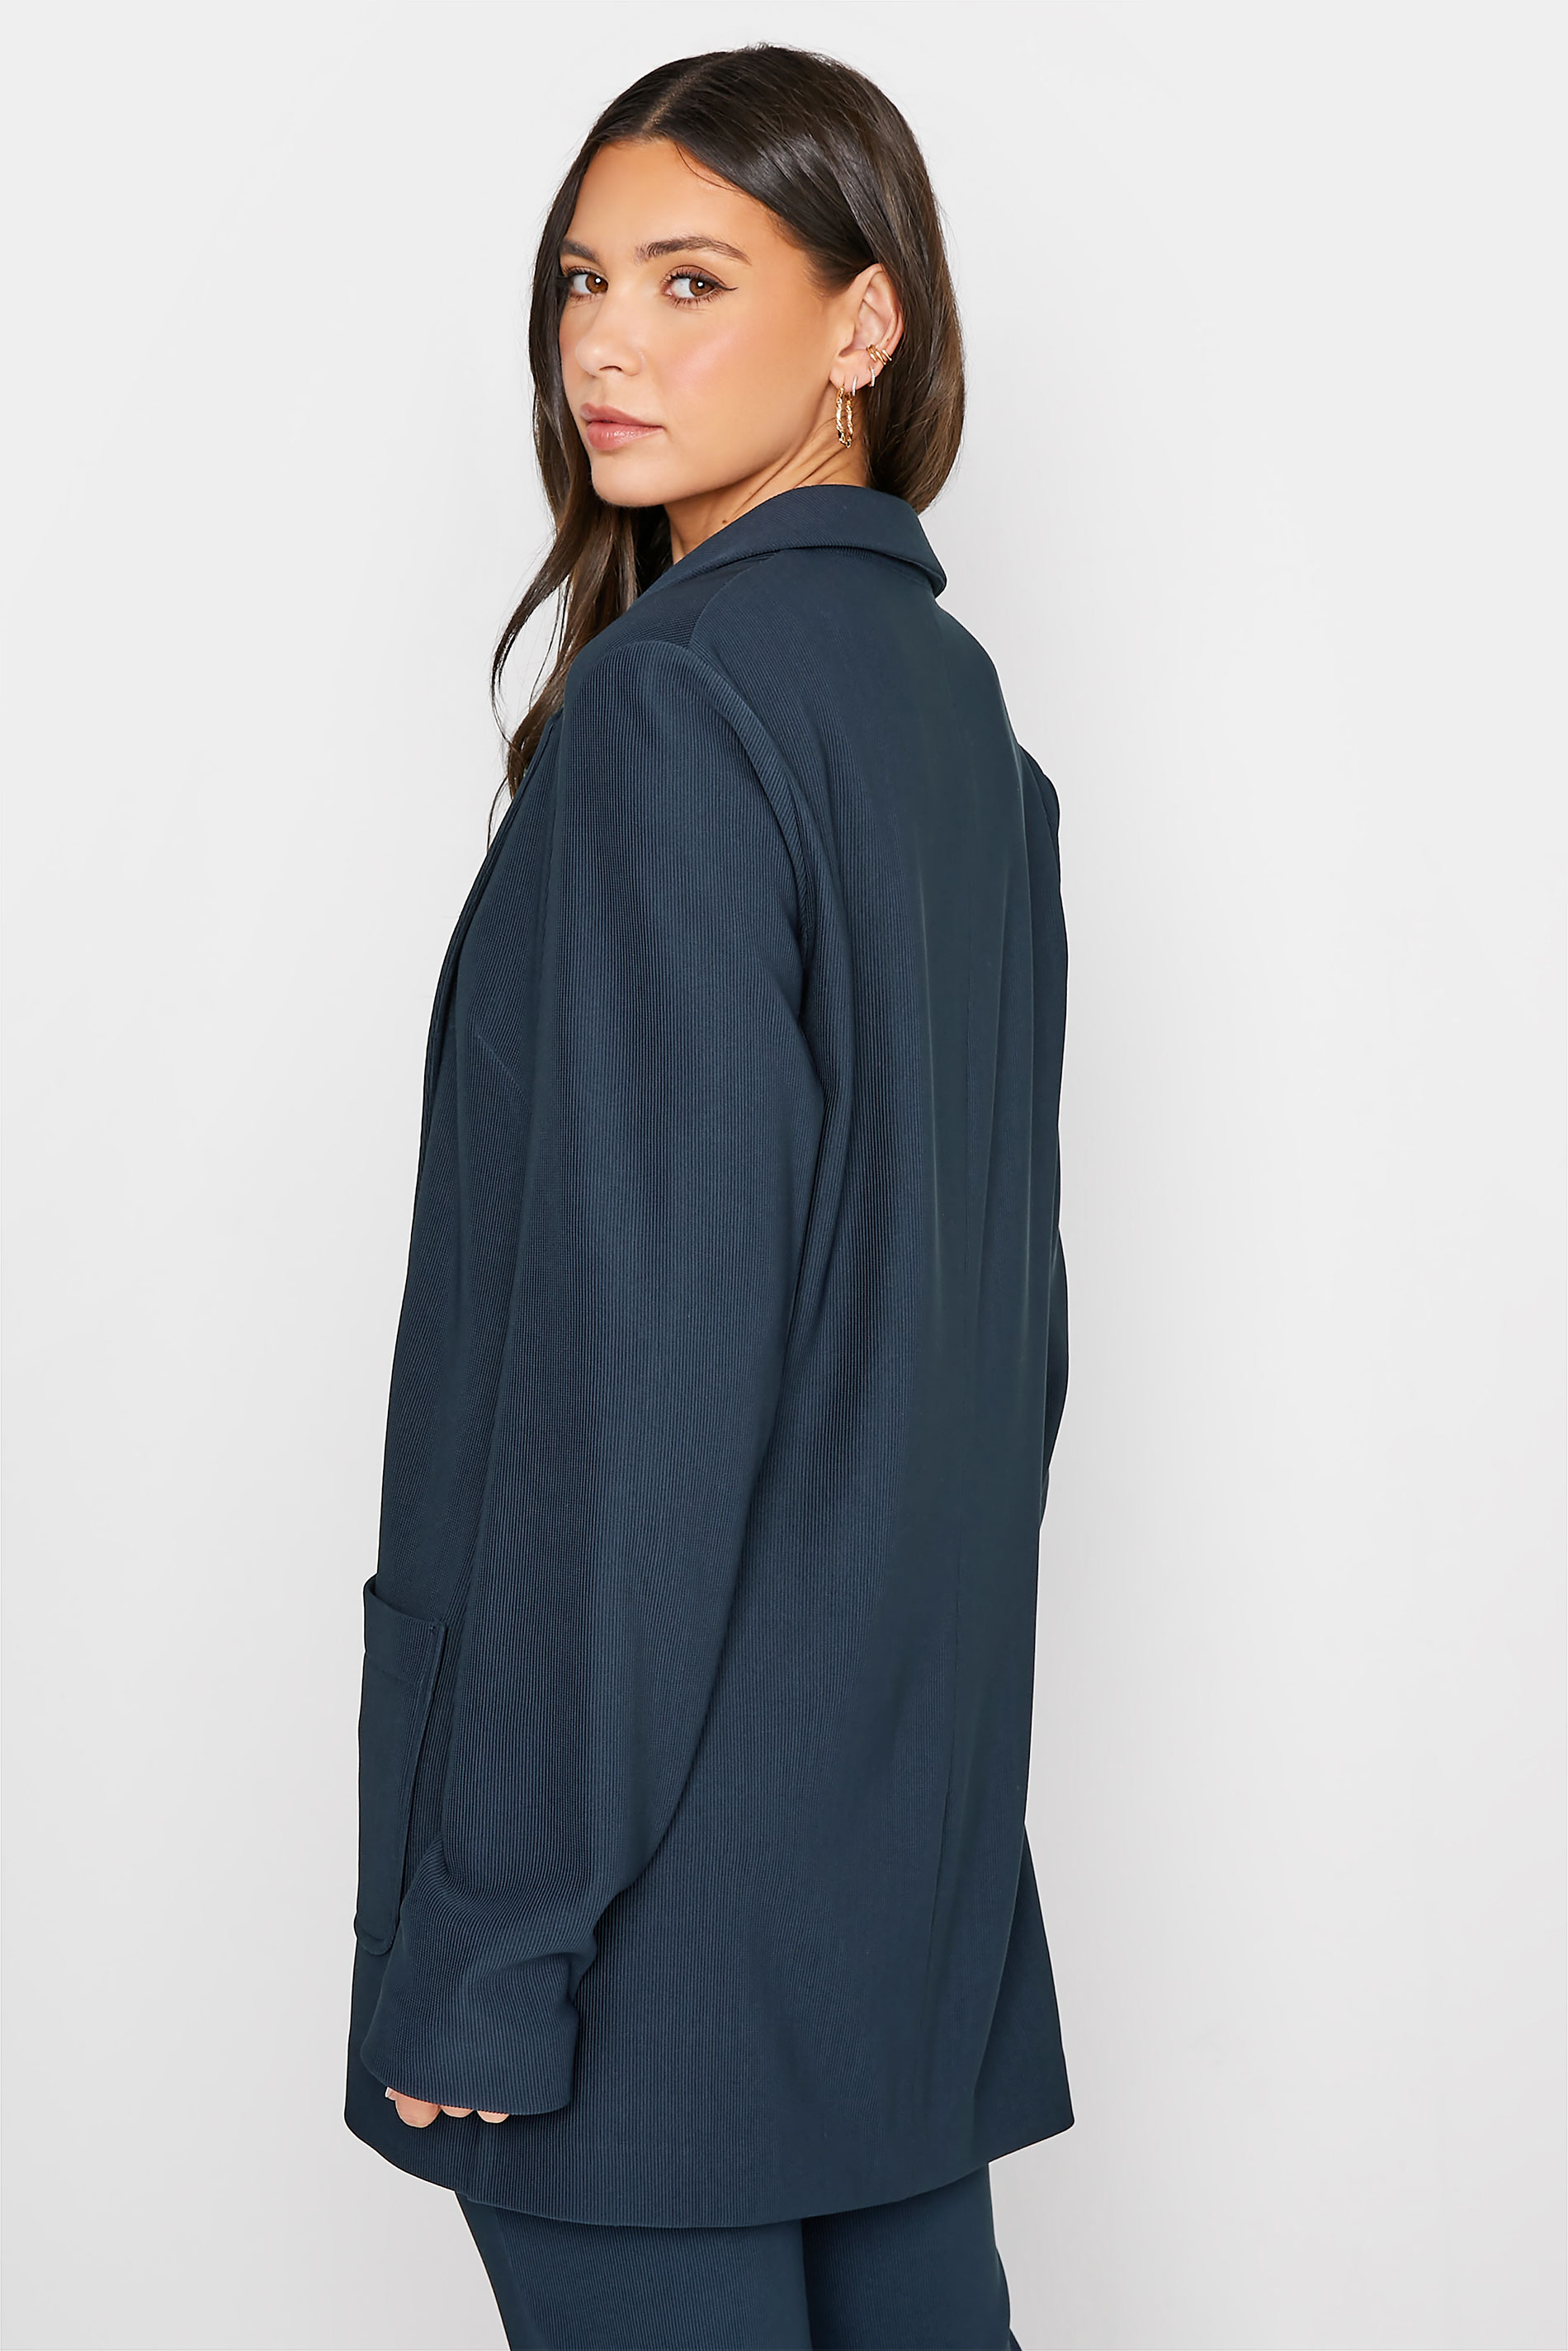 LTS Tall Women's Navy Blue Ribbed Blazer Jacket | Long Tall Sally  3